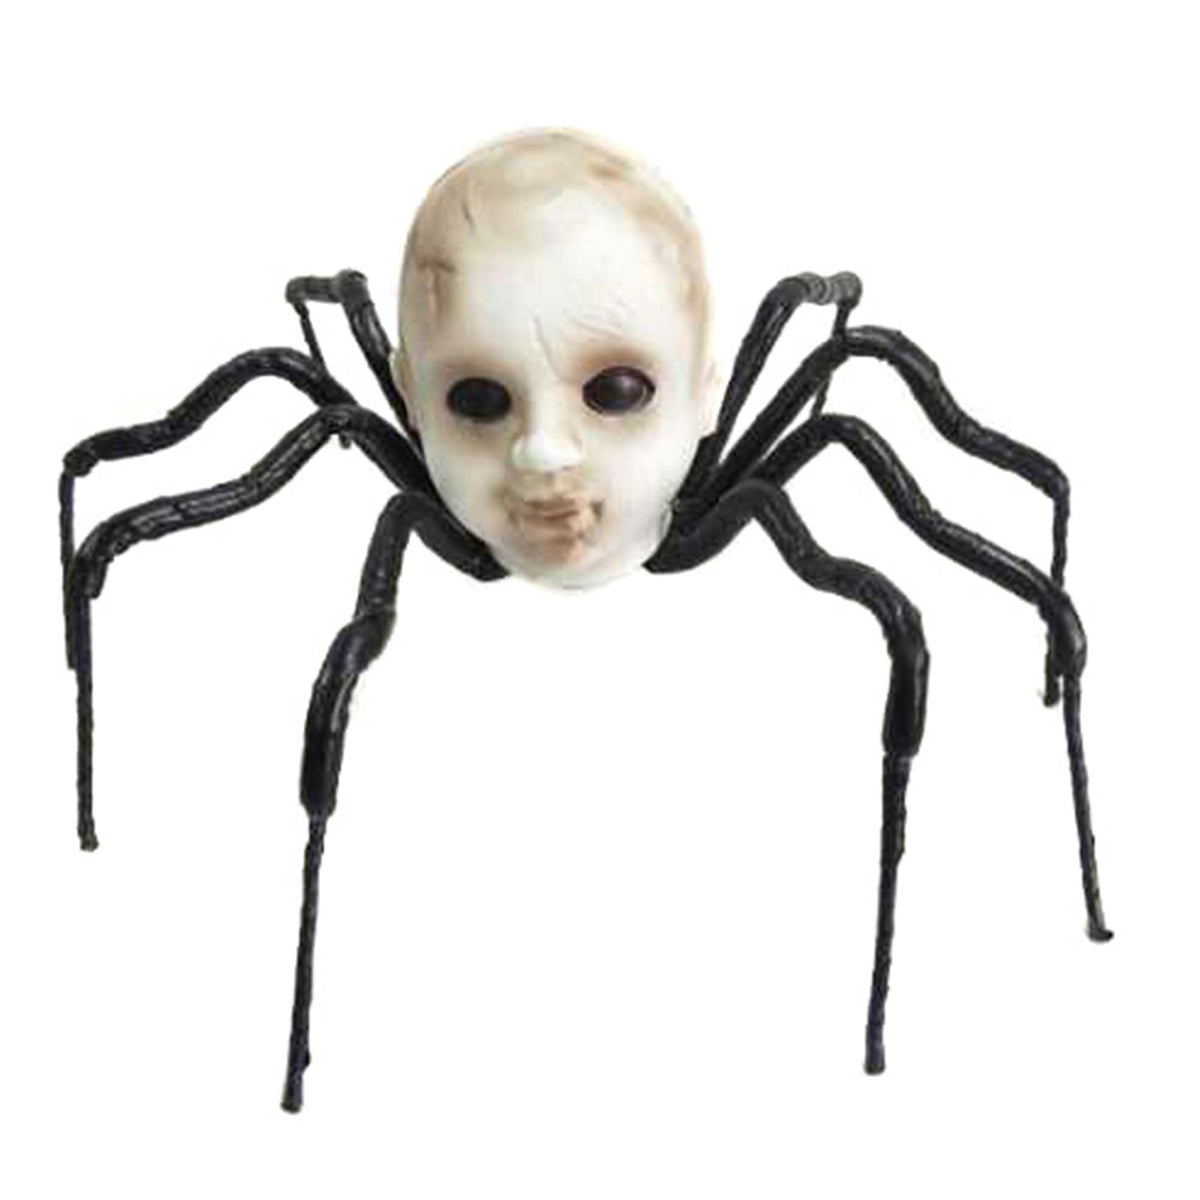 SUNSTAR INDUSTRIES Halloween Baby Head Spider, 23 Inches, 1 Count